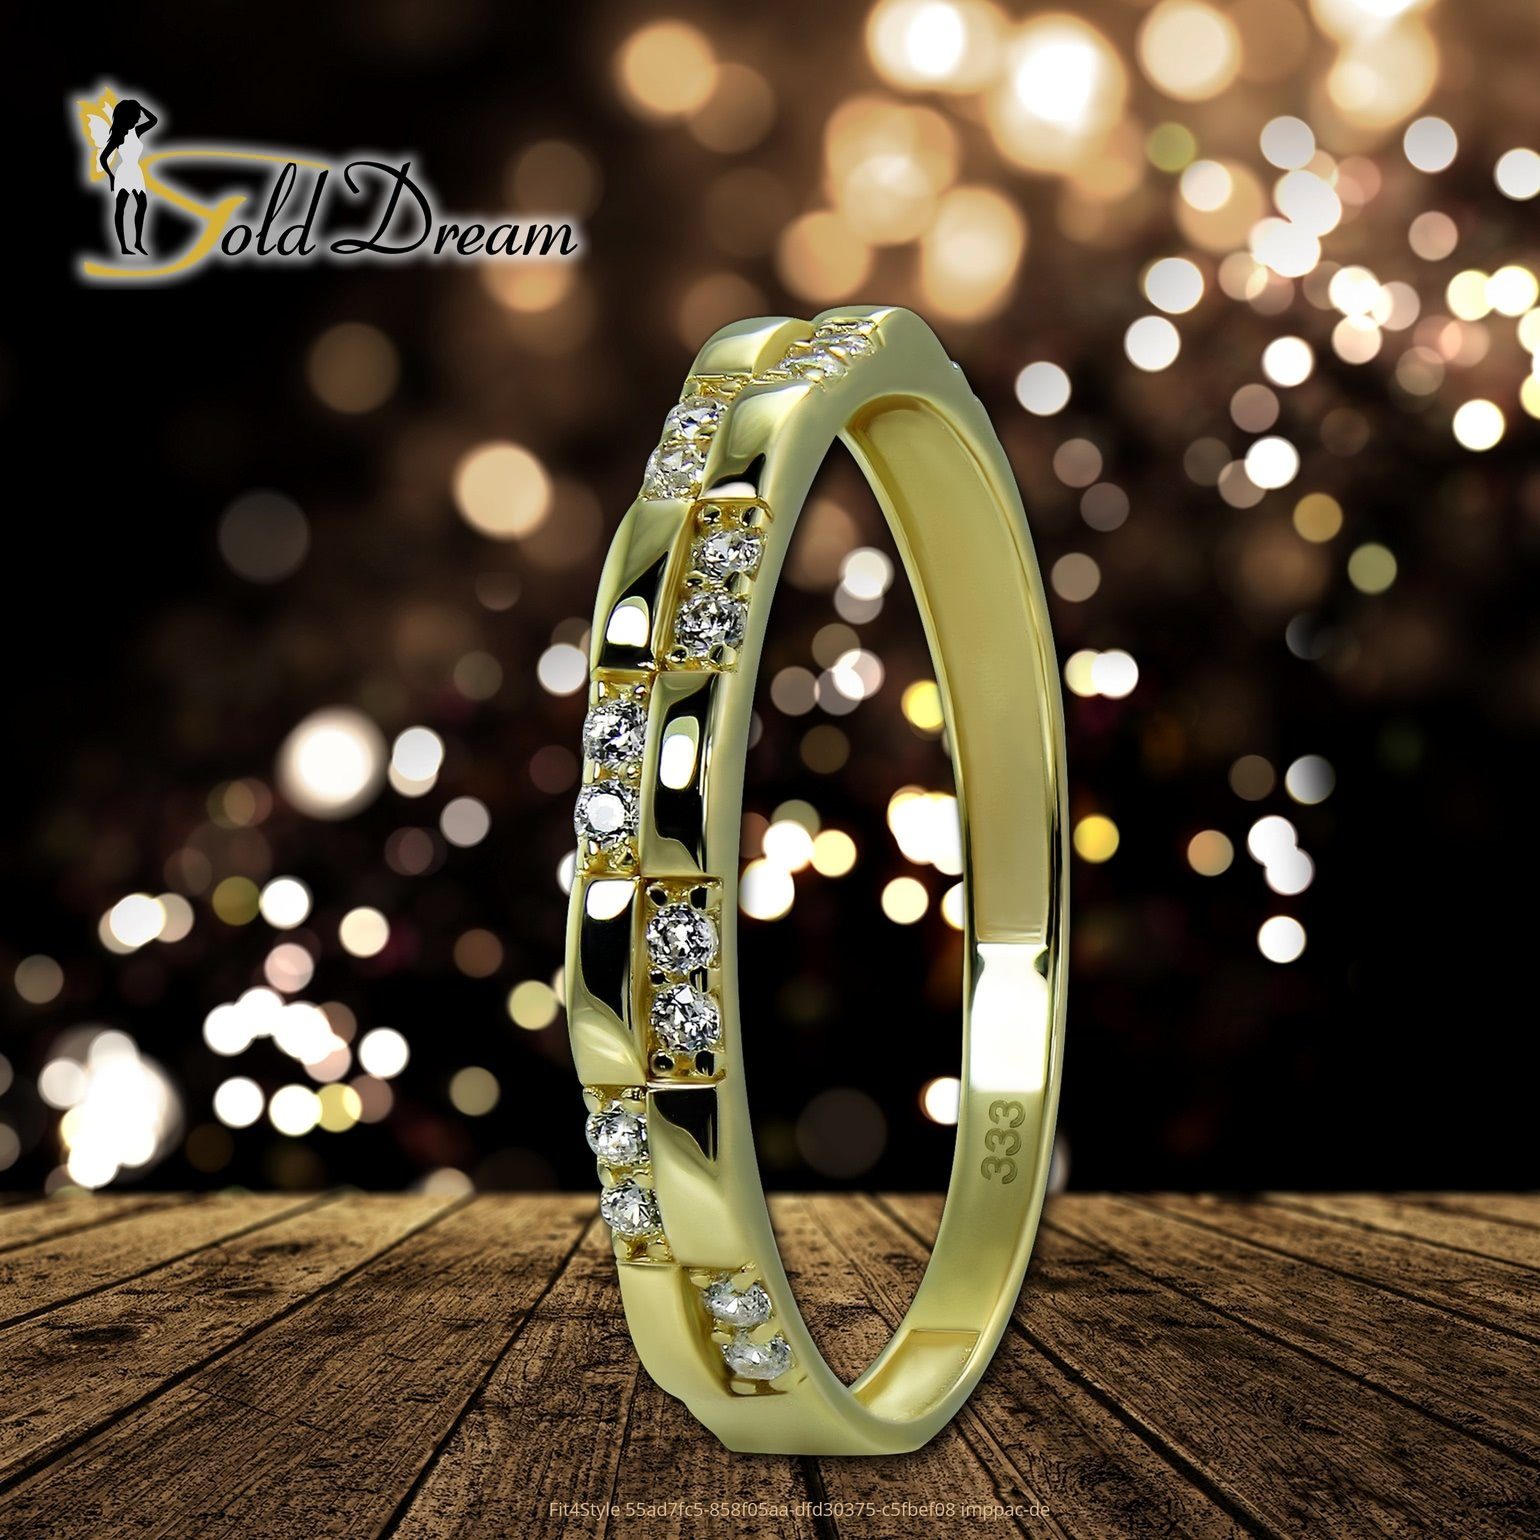 Gr.60 Karat, GoldDream Fashion Damen gold, Ring (Fingerring), GoldDream Ring Gelbgold Gold Fashion weiß 333 8 Farbe: - Goldring